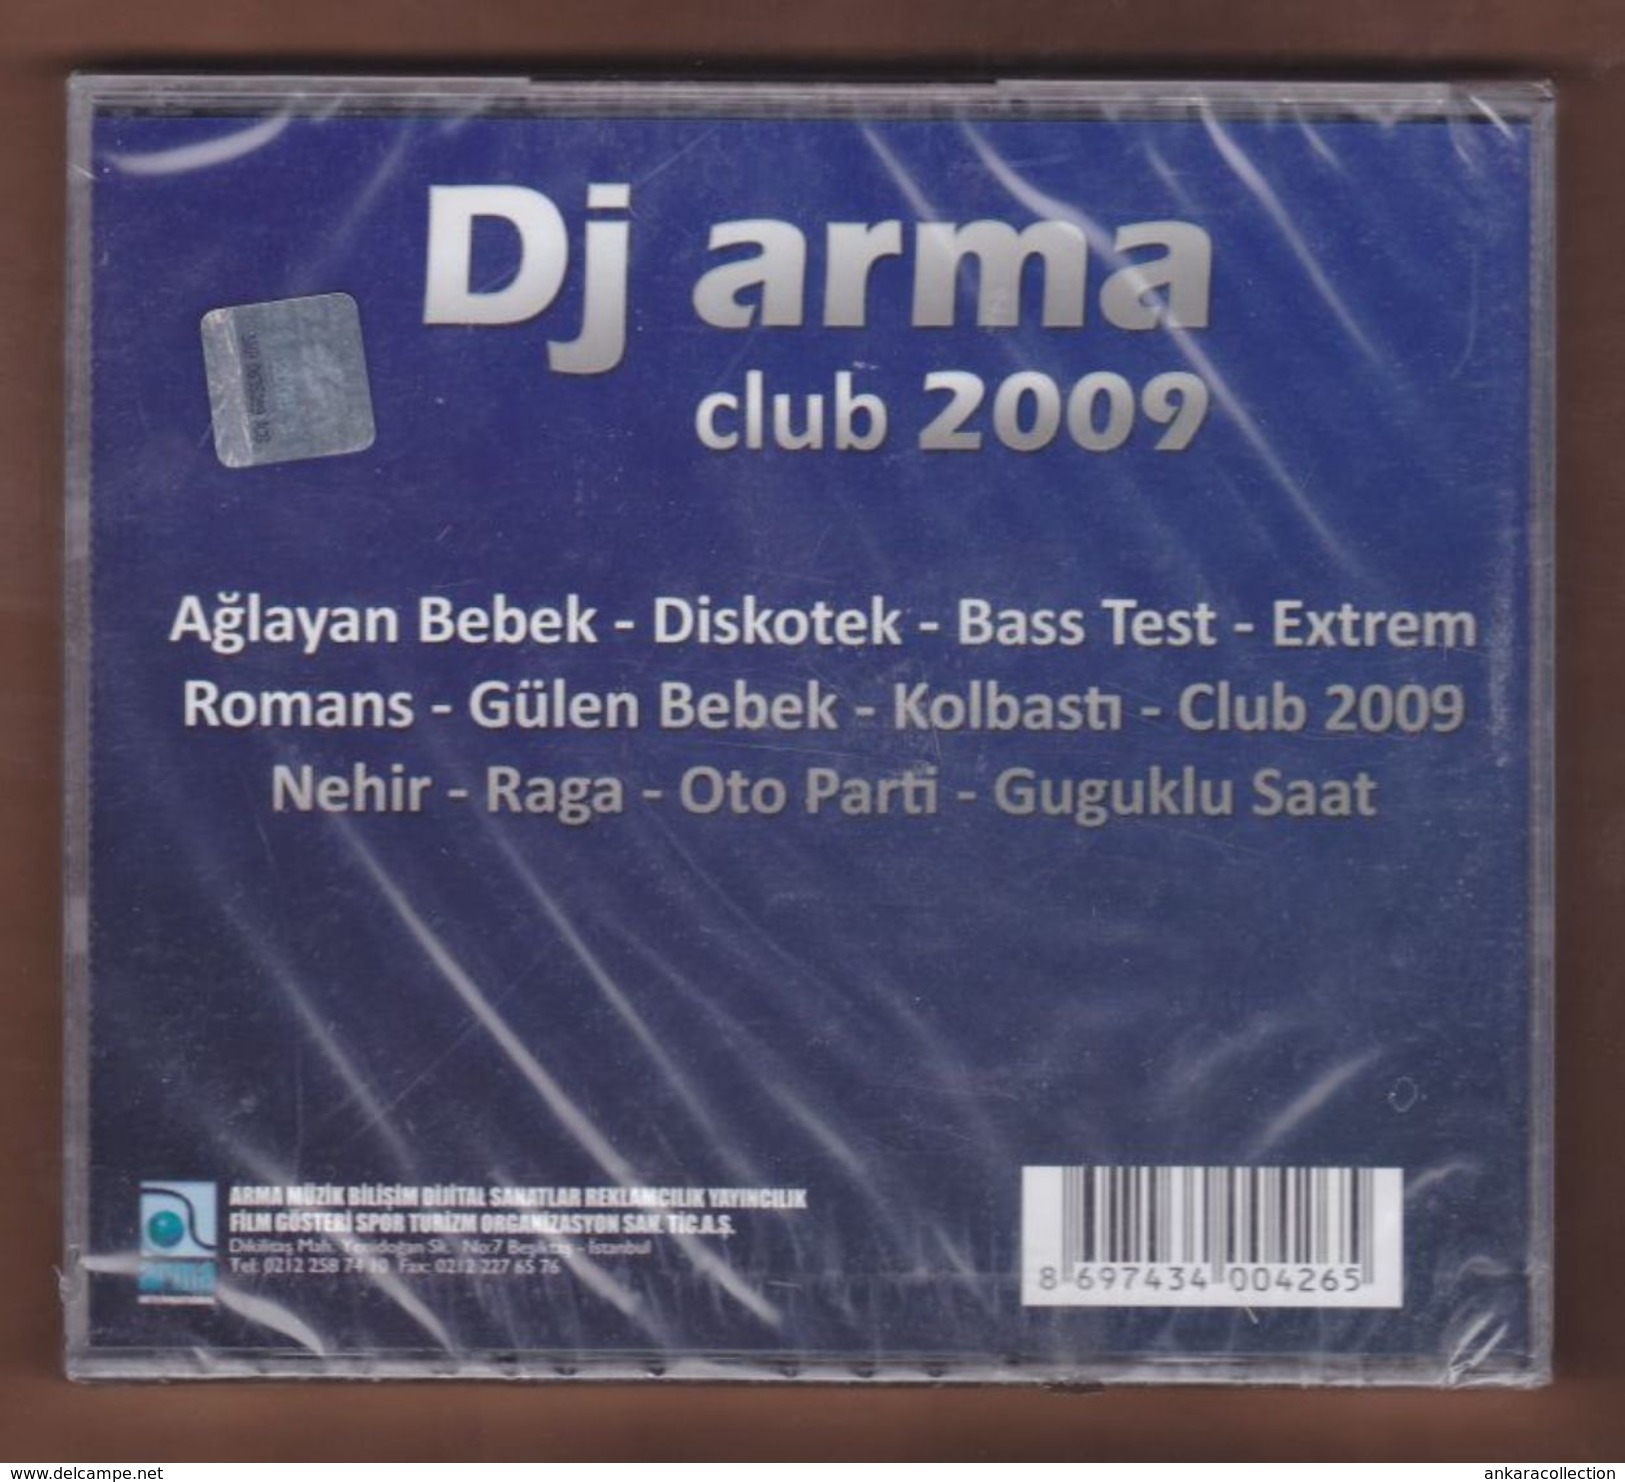 AC -  Dj Arma Club 2009 BRAND NEW TURKISH MUSIC CD - World Music